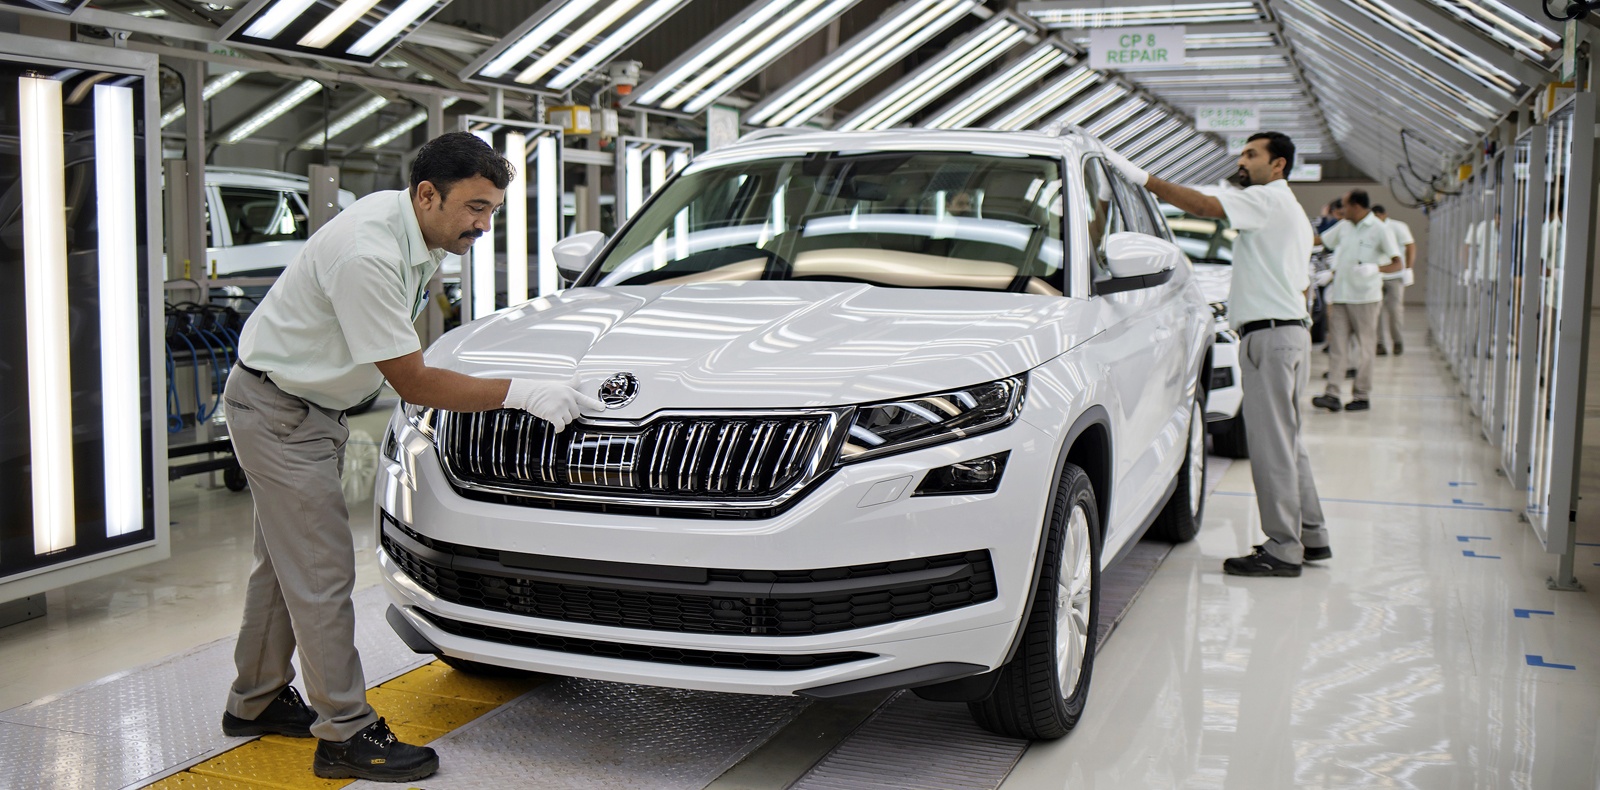 Volkswagen Merges Three Subsidiaries in India